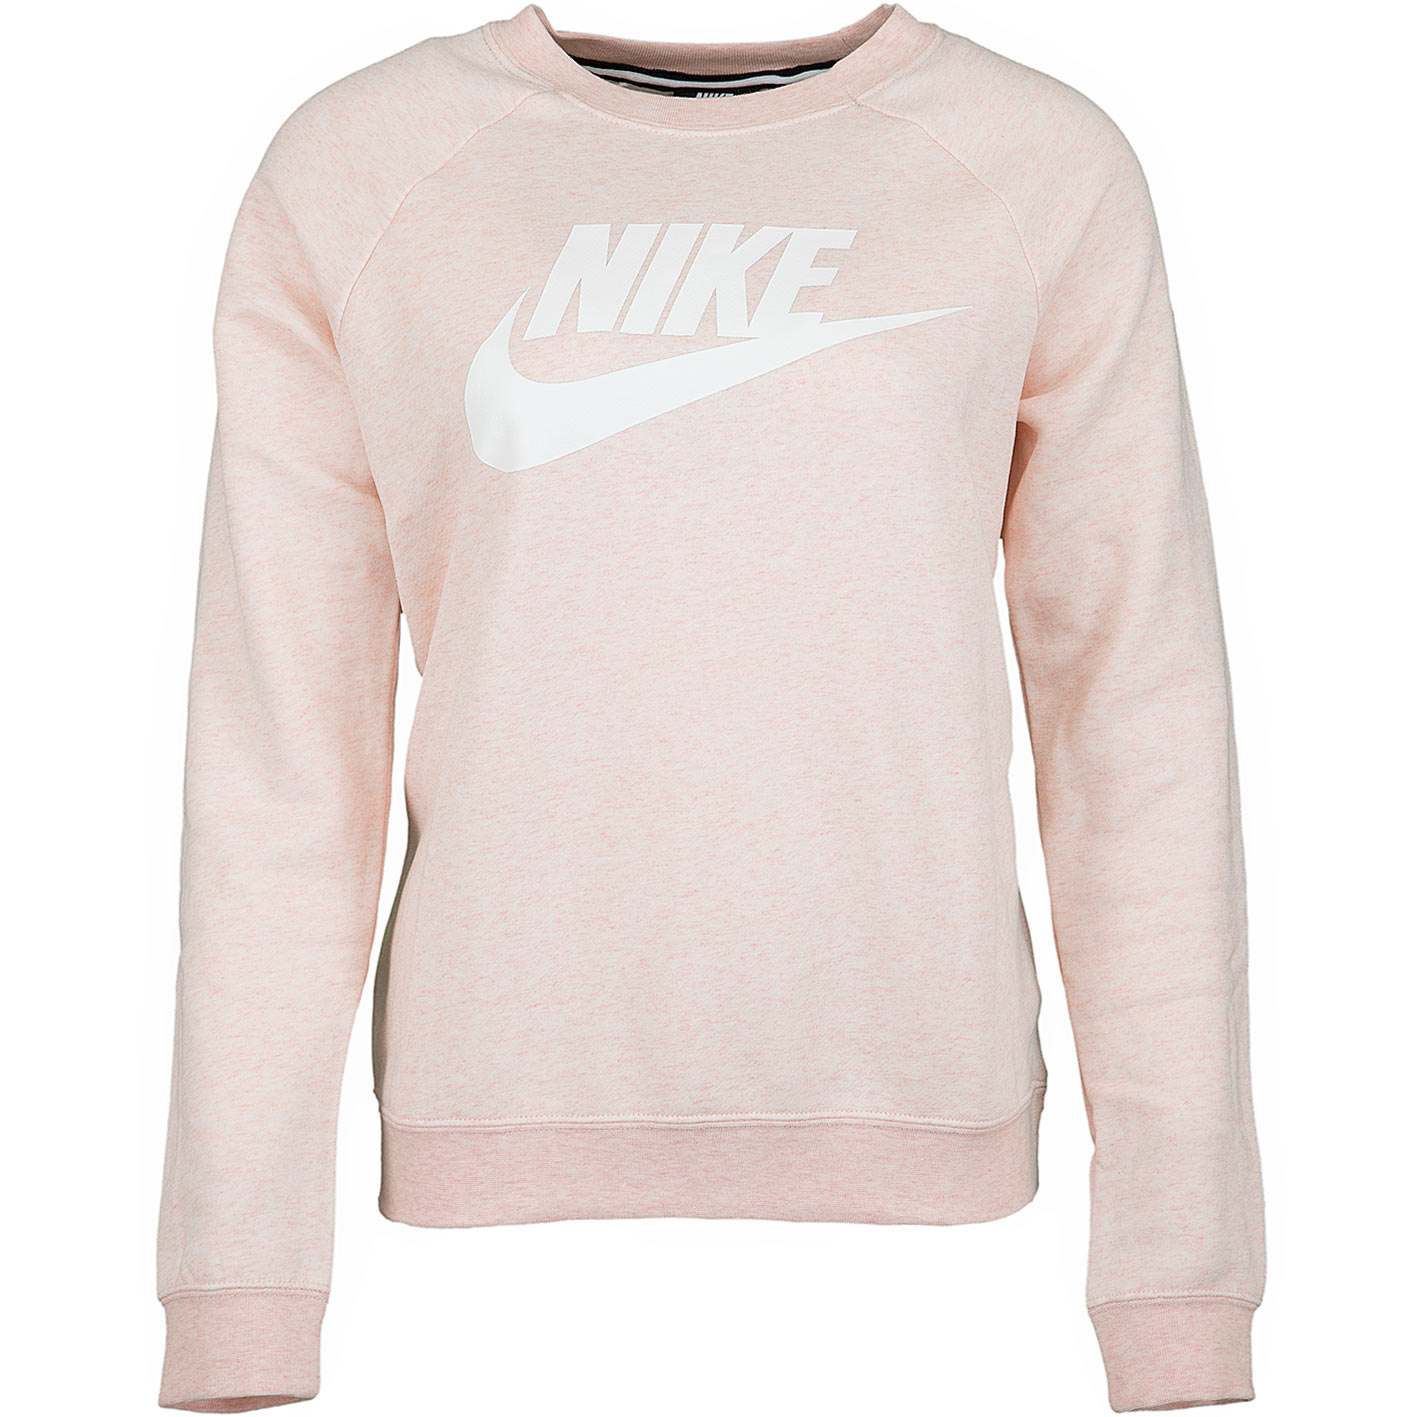 ☆ Nike Damen Sweatshirt Rally pink/weiß - hier bestellen!